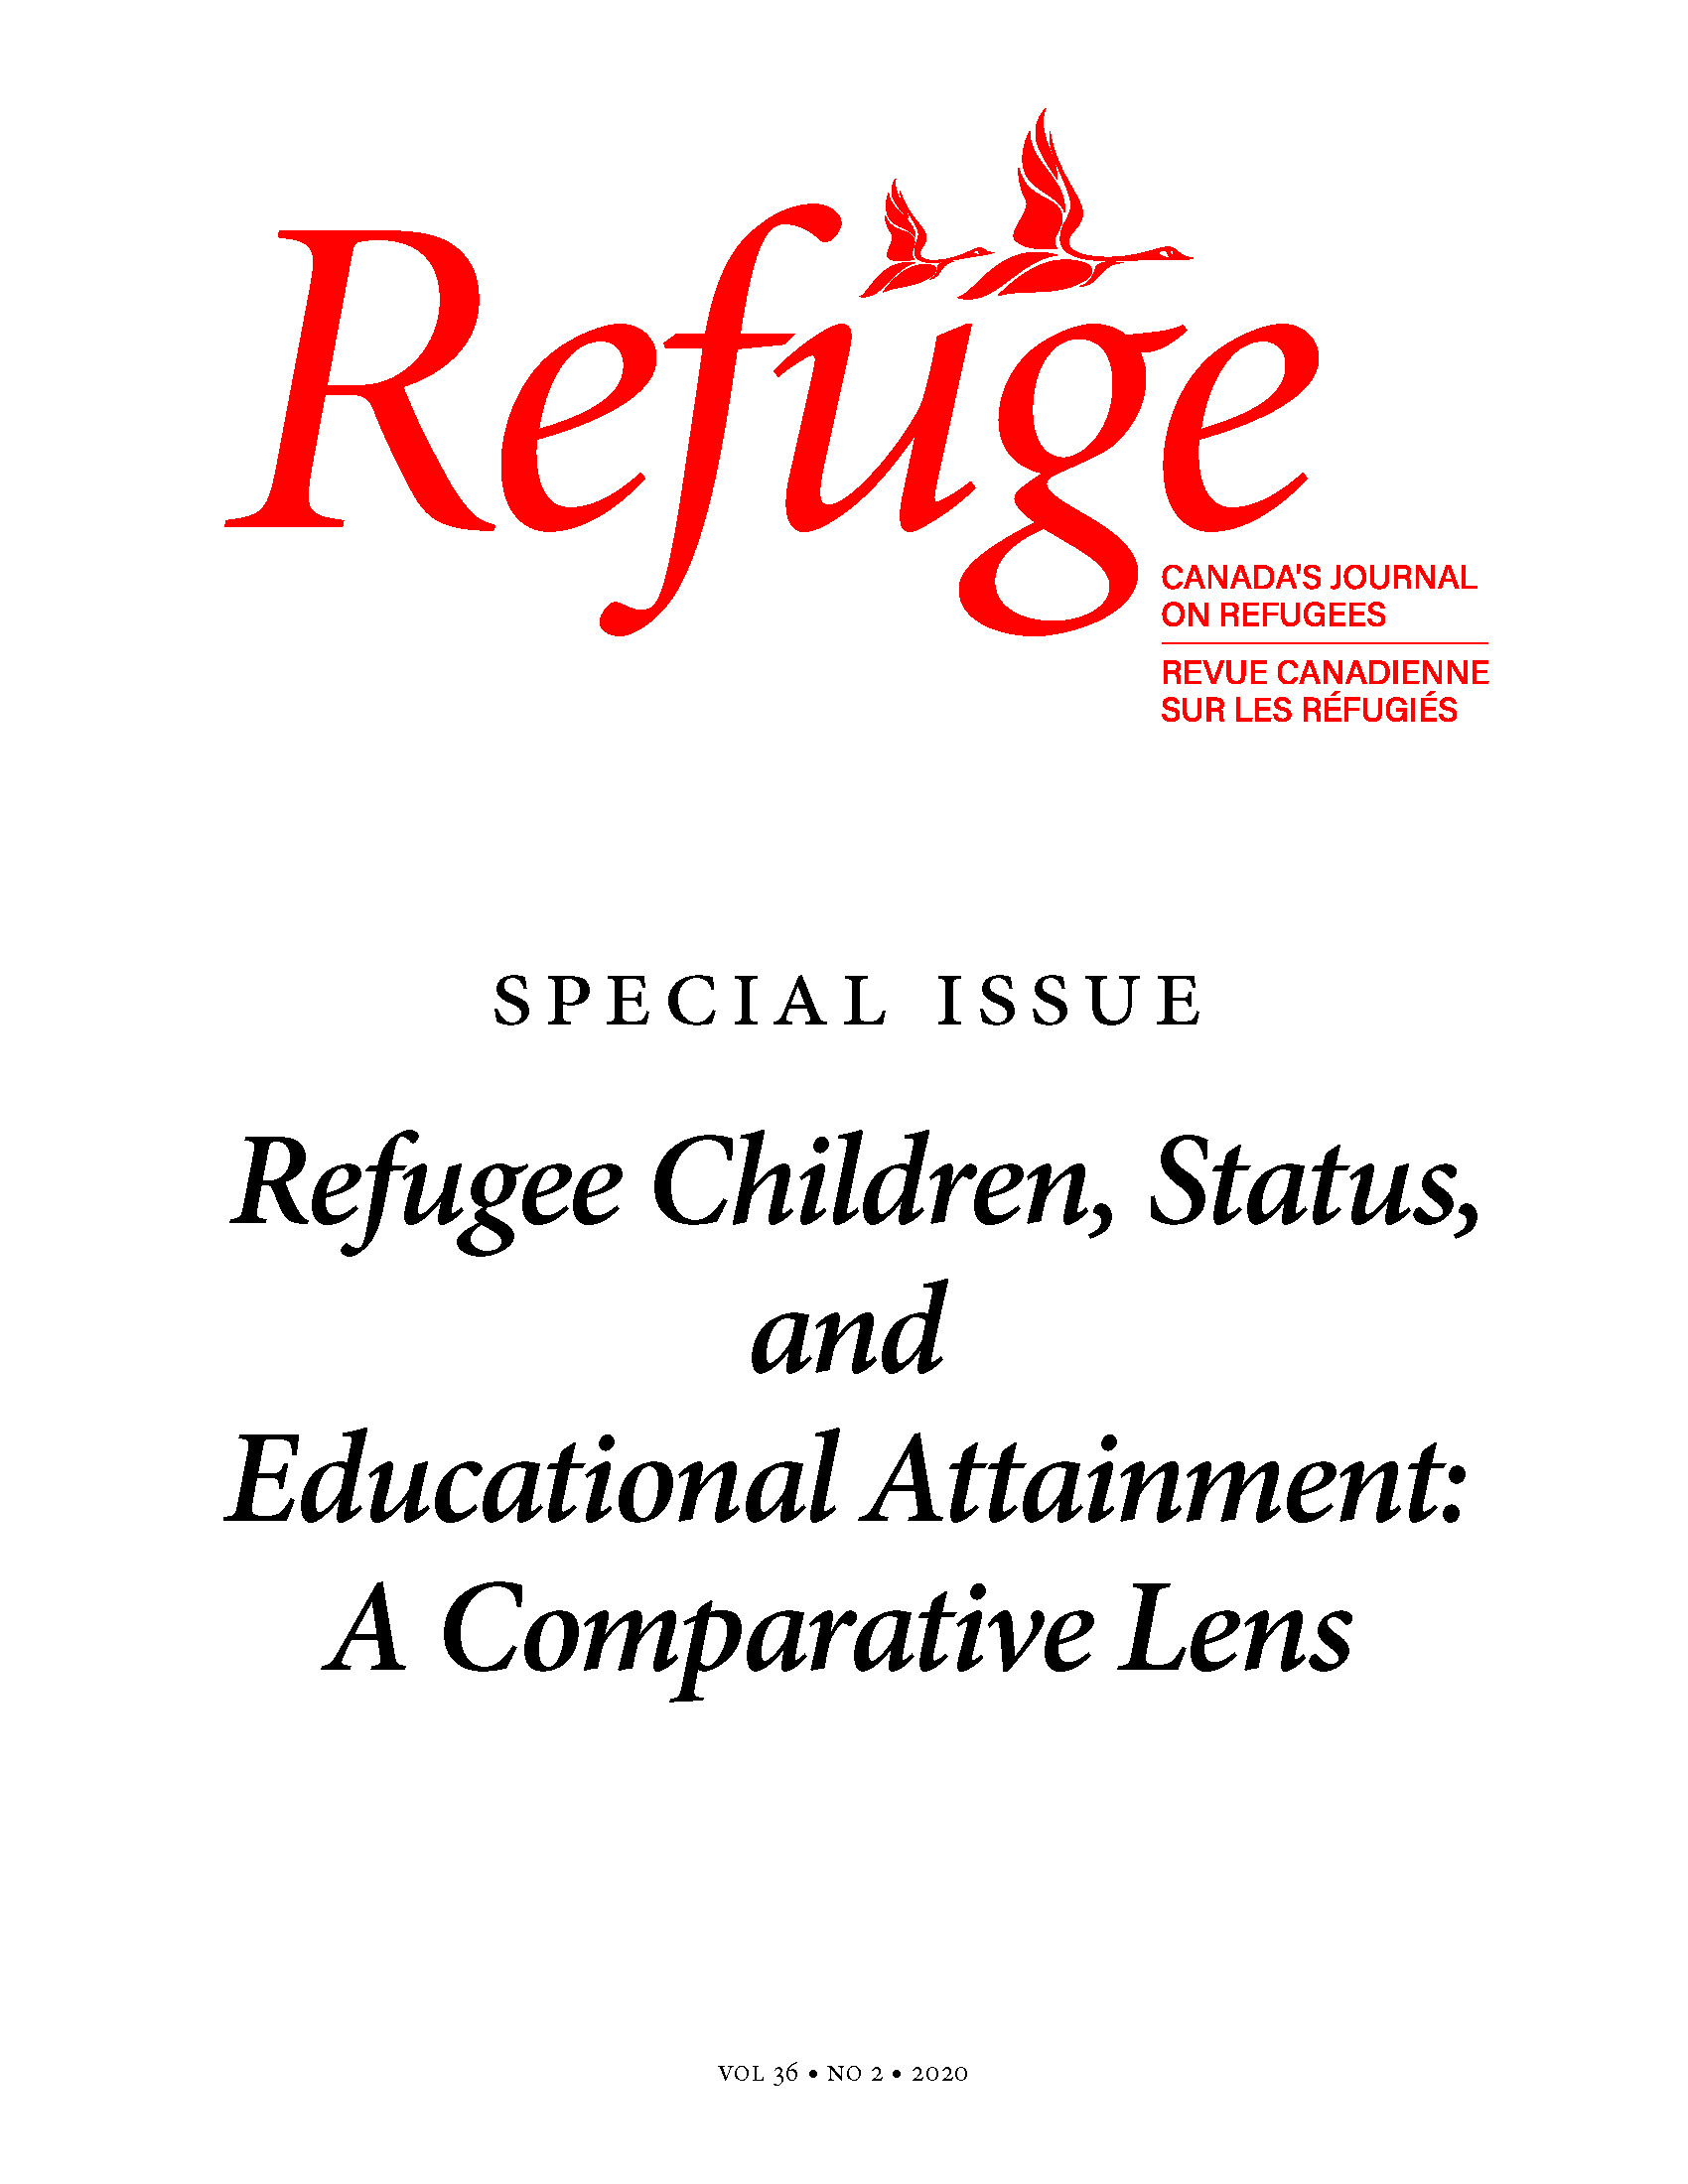 cover image of Refuge special issue on refugee children